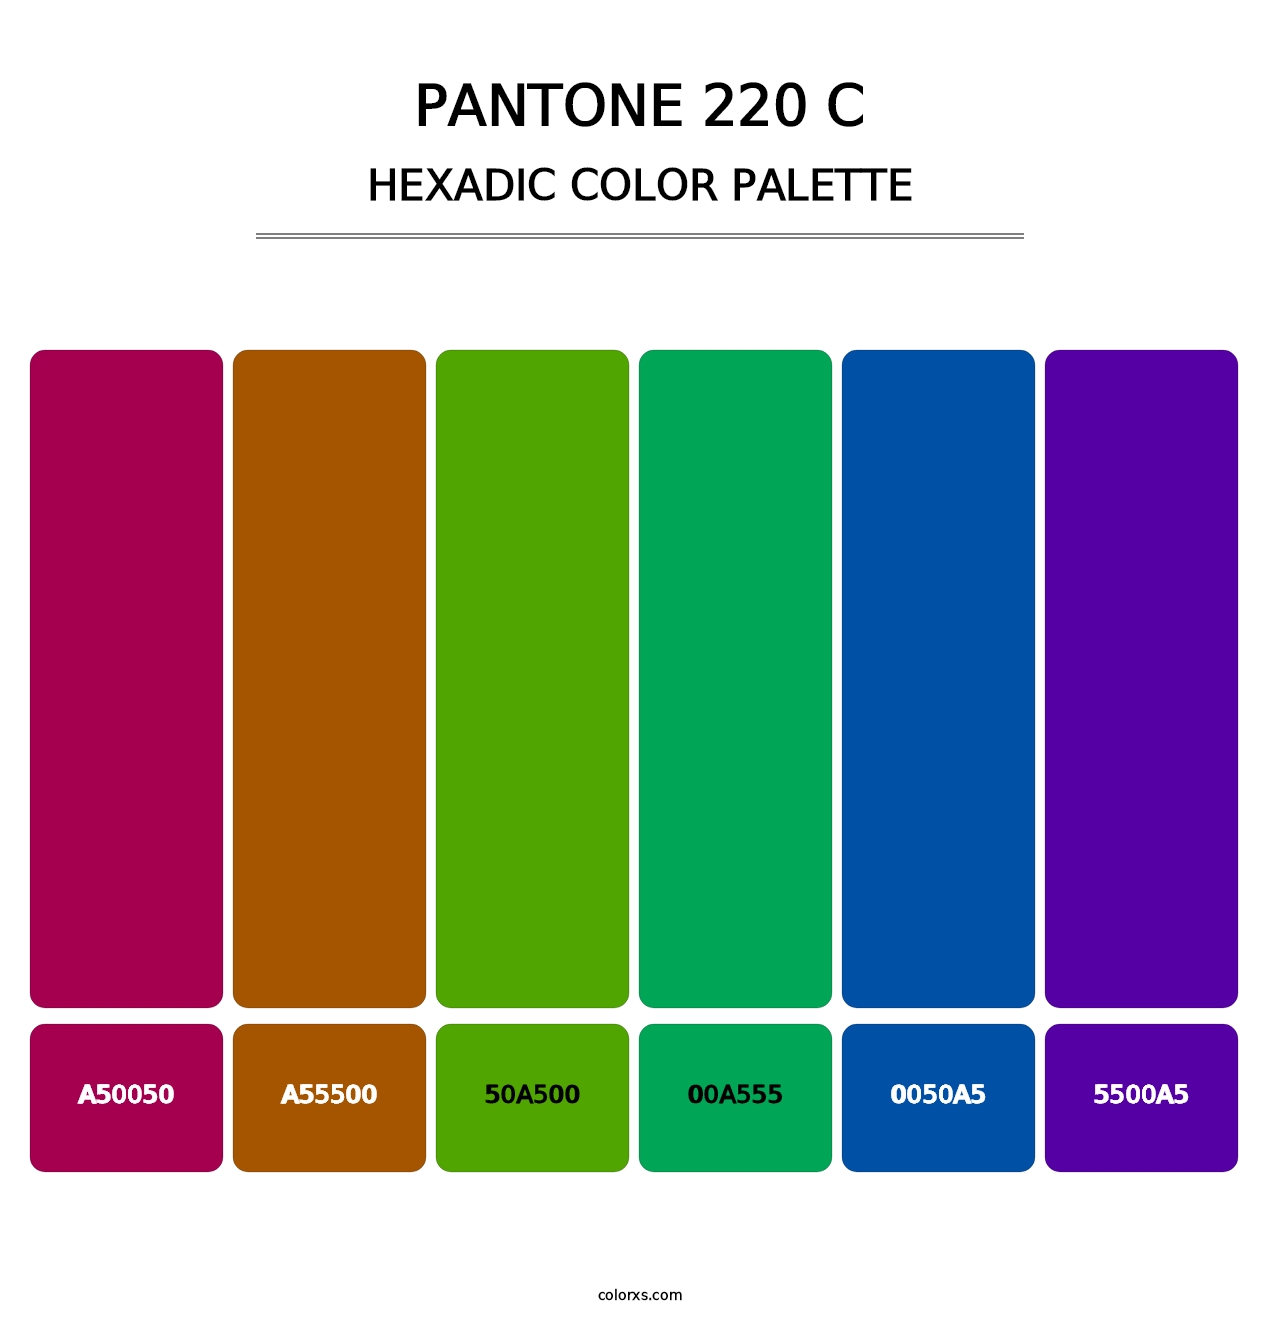 PANTONE 220 C - Hexadic Color Palette